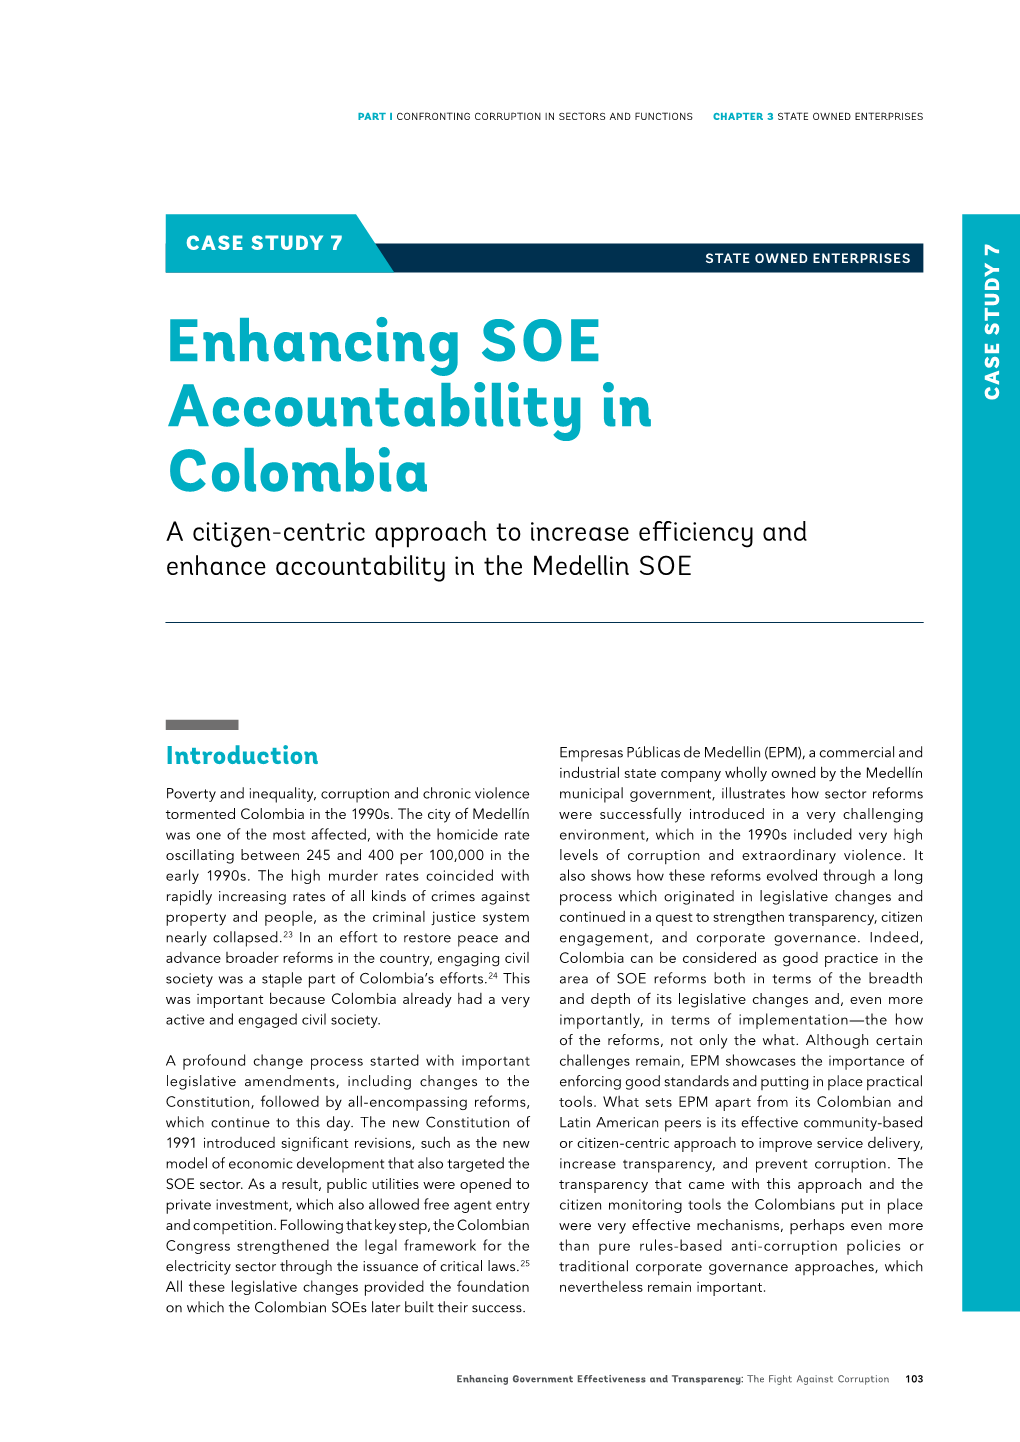 Enhancing SOE Accountability in Colombia